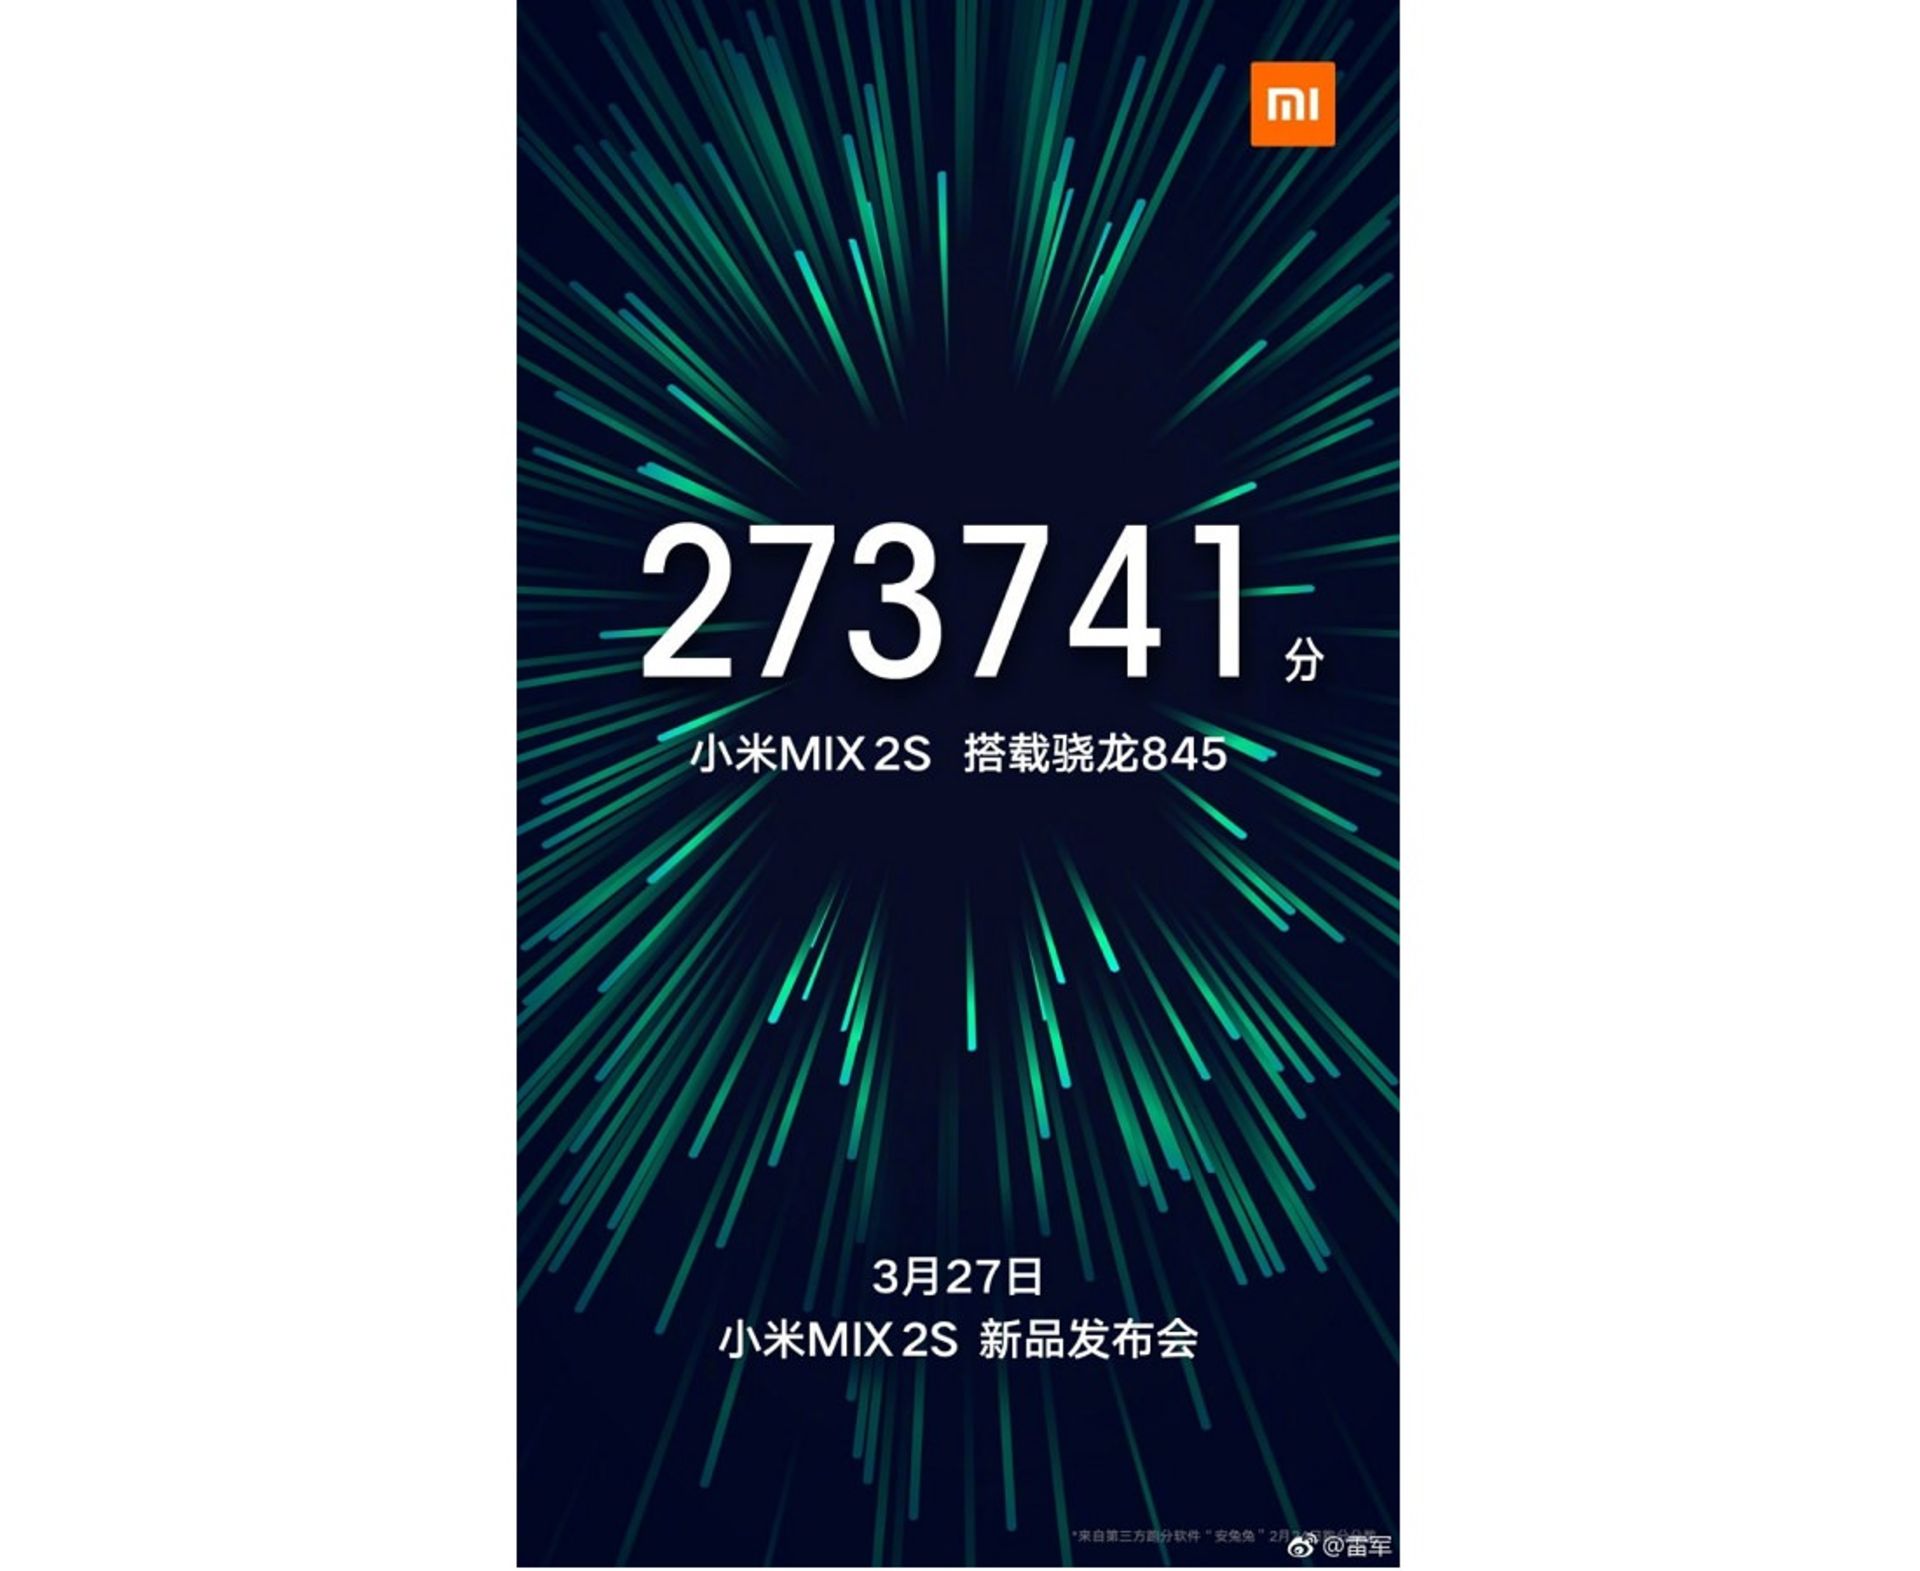 Xiaomi Mi MIX 2S Announcement Confirmation